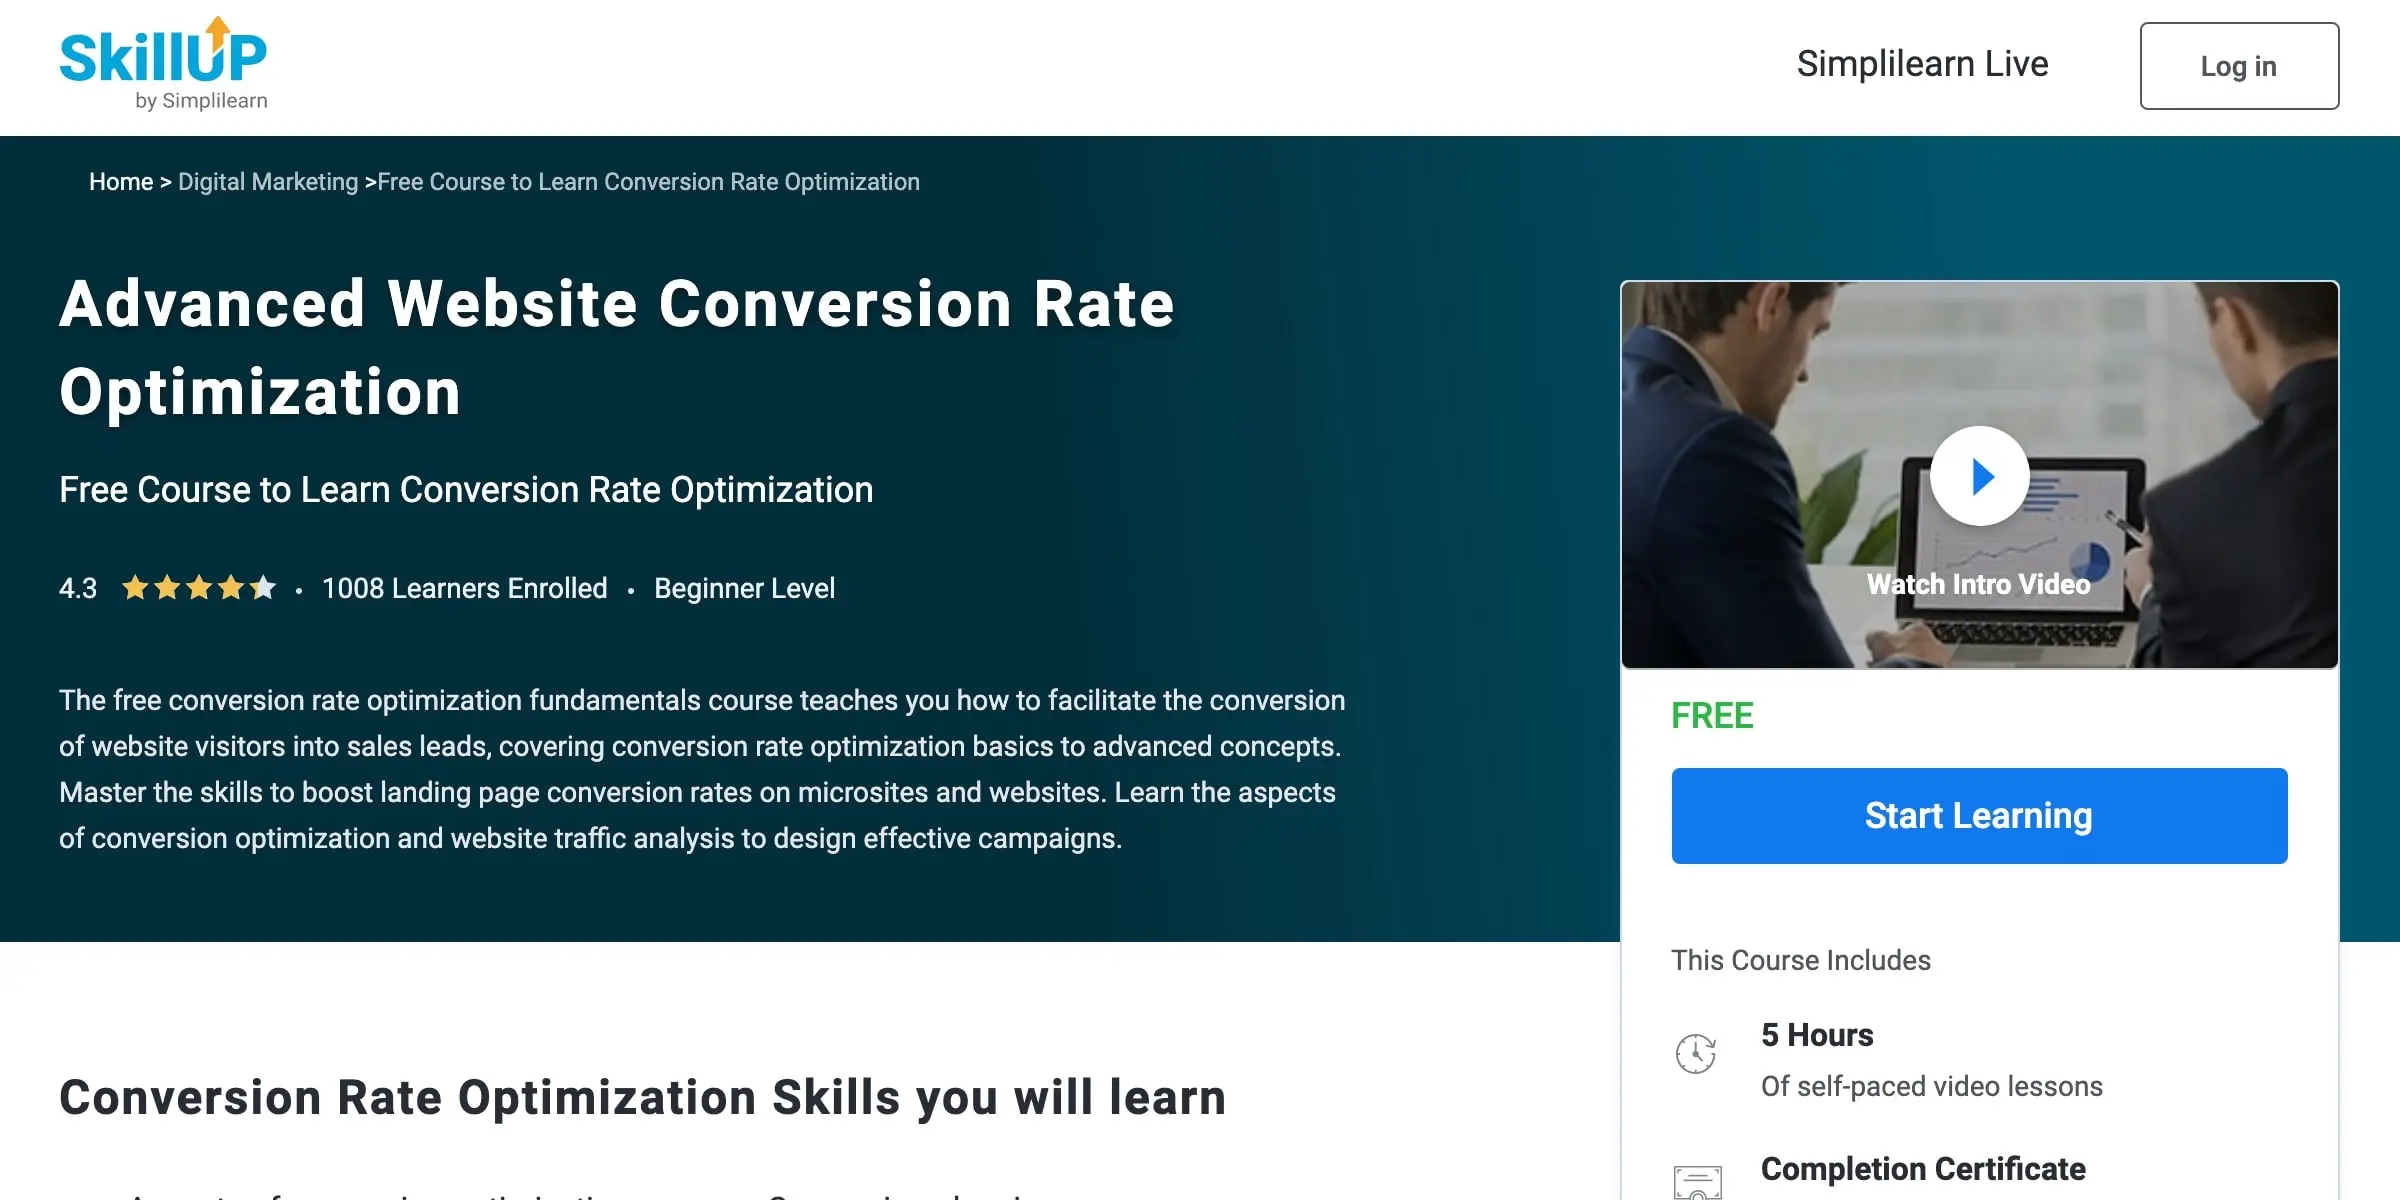 Advanced Website Conversion Rate Optimization (SimpliLearn)